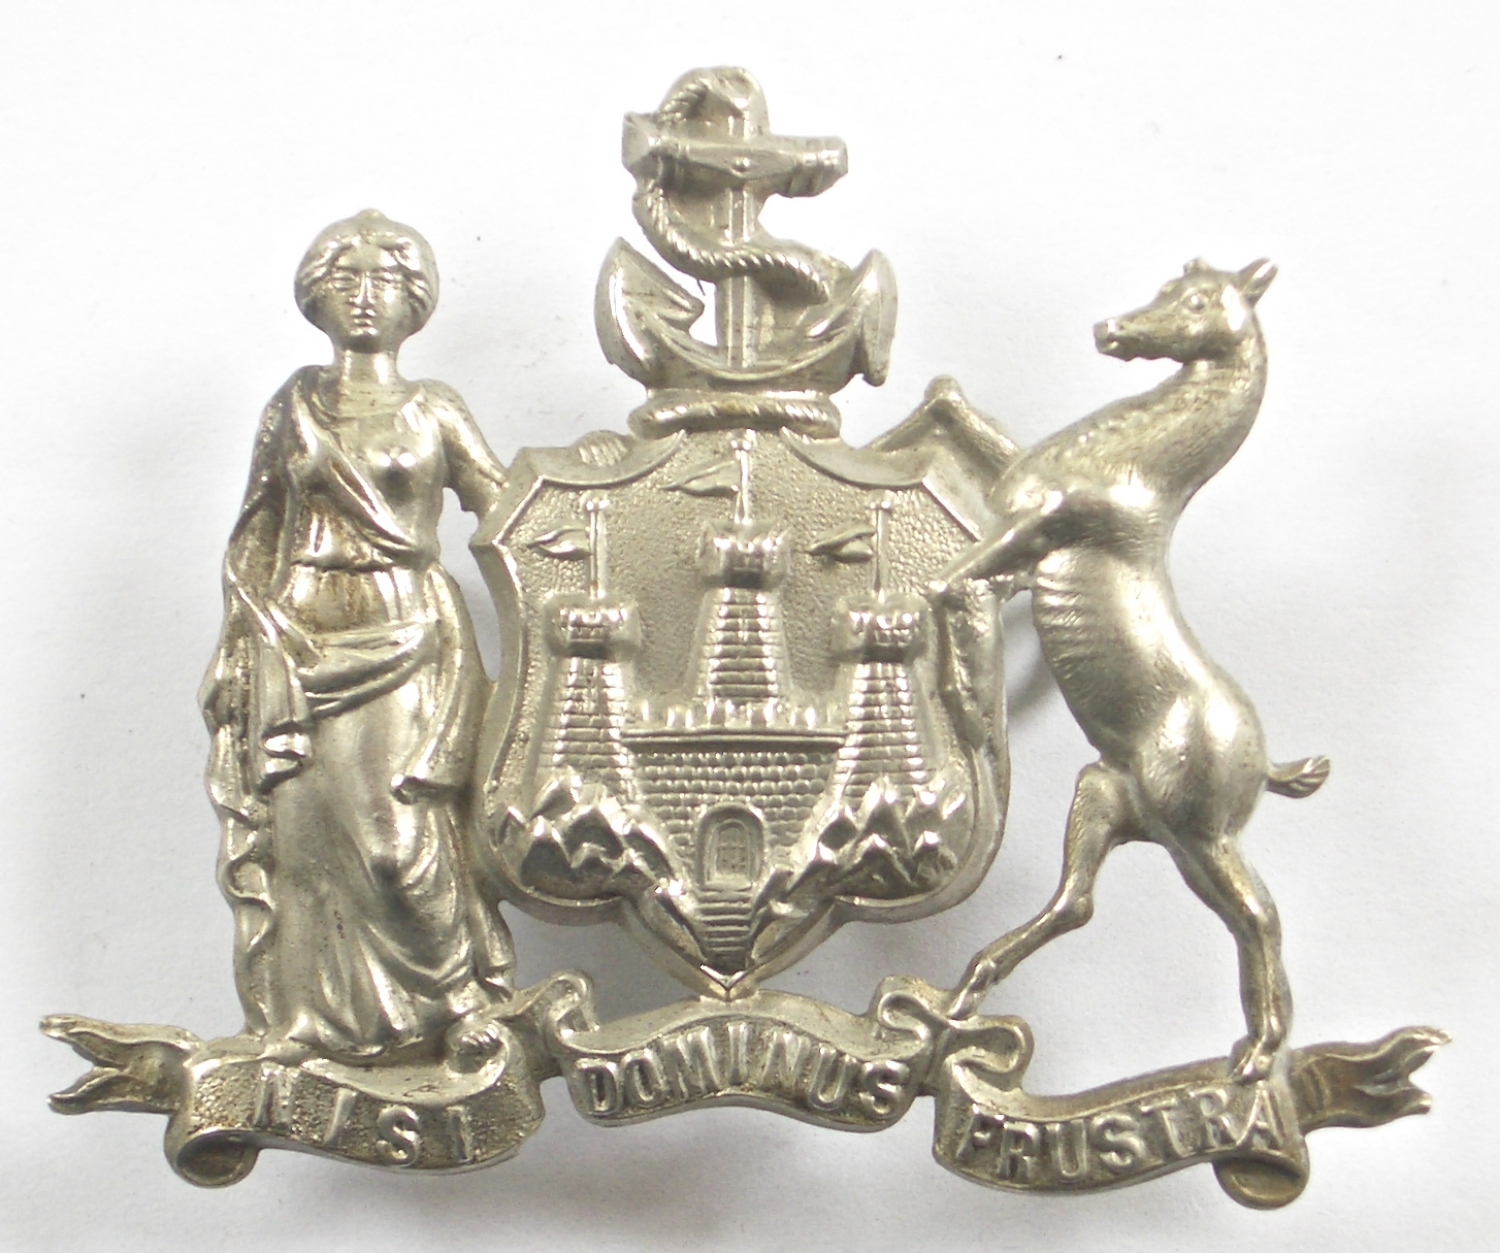 Edinburgh City Police cap badge